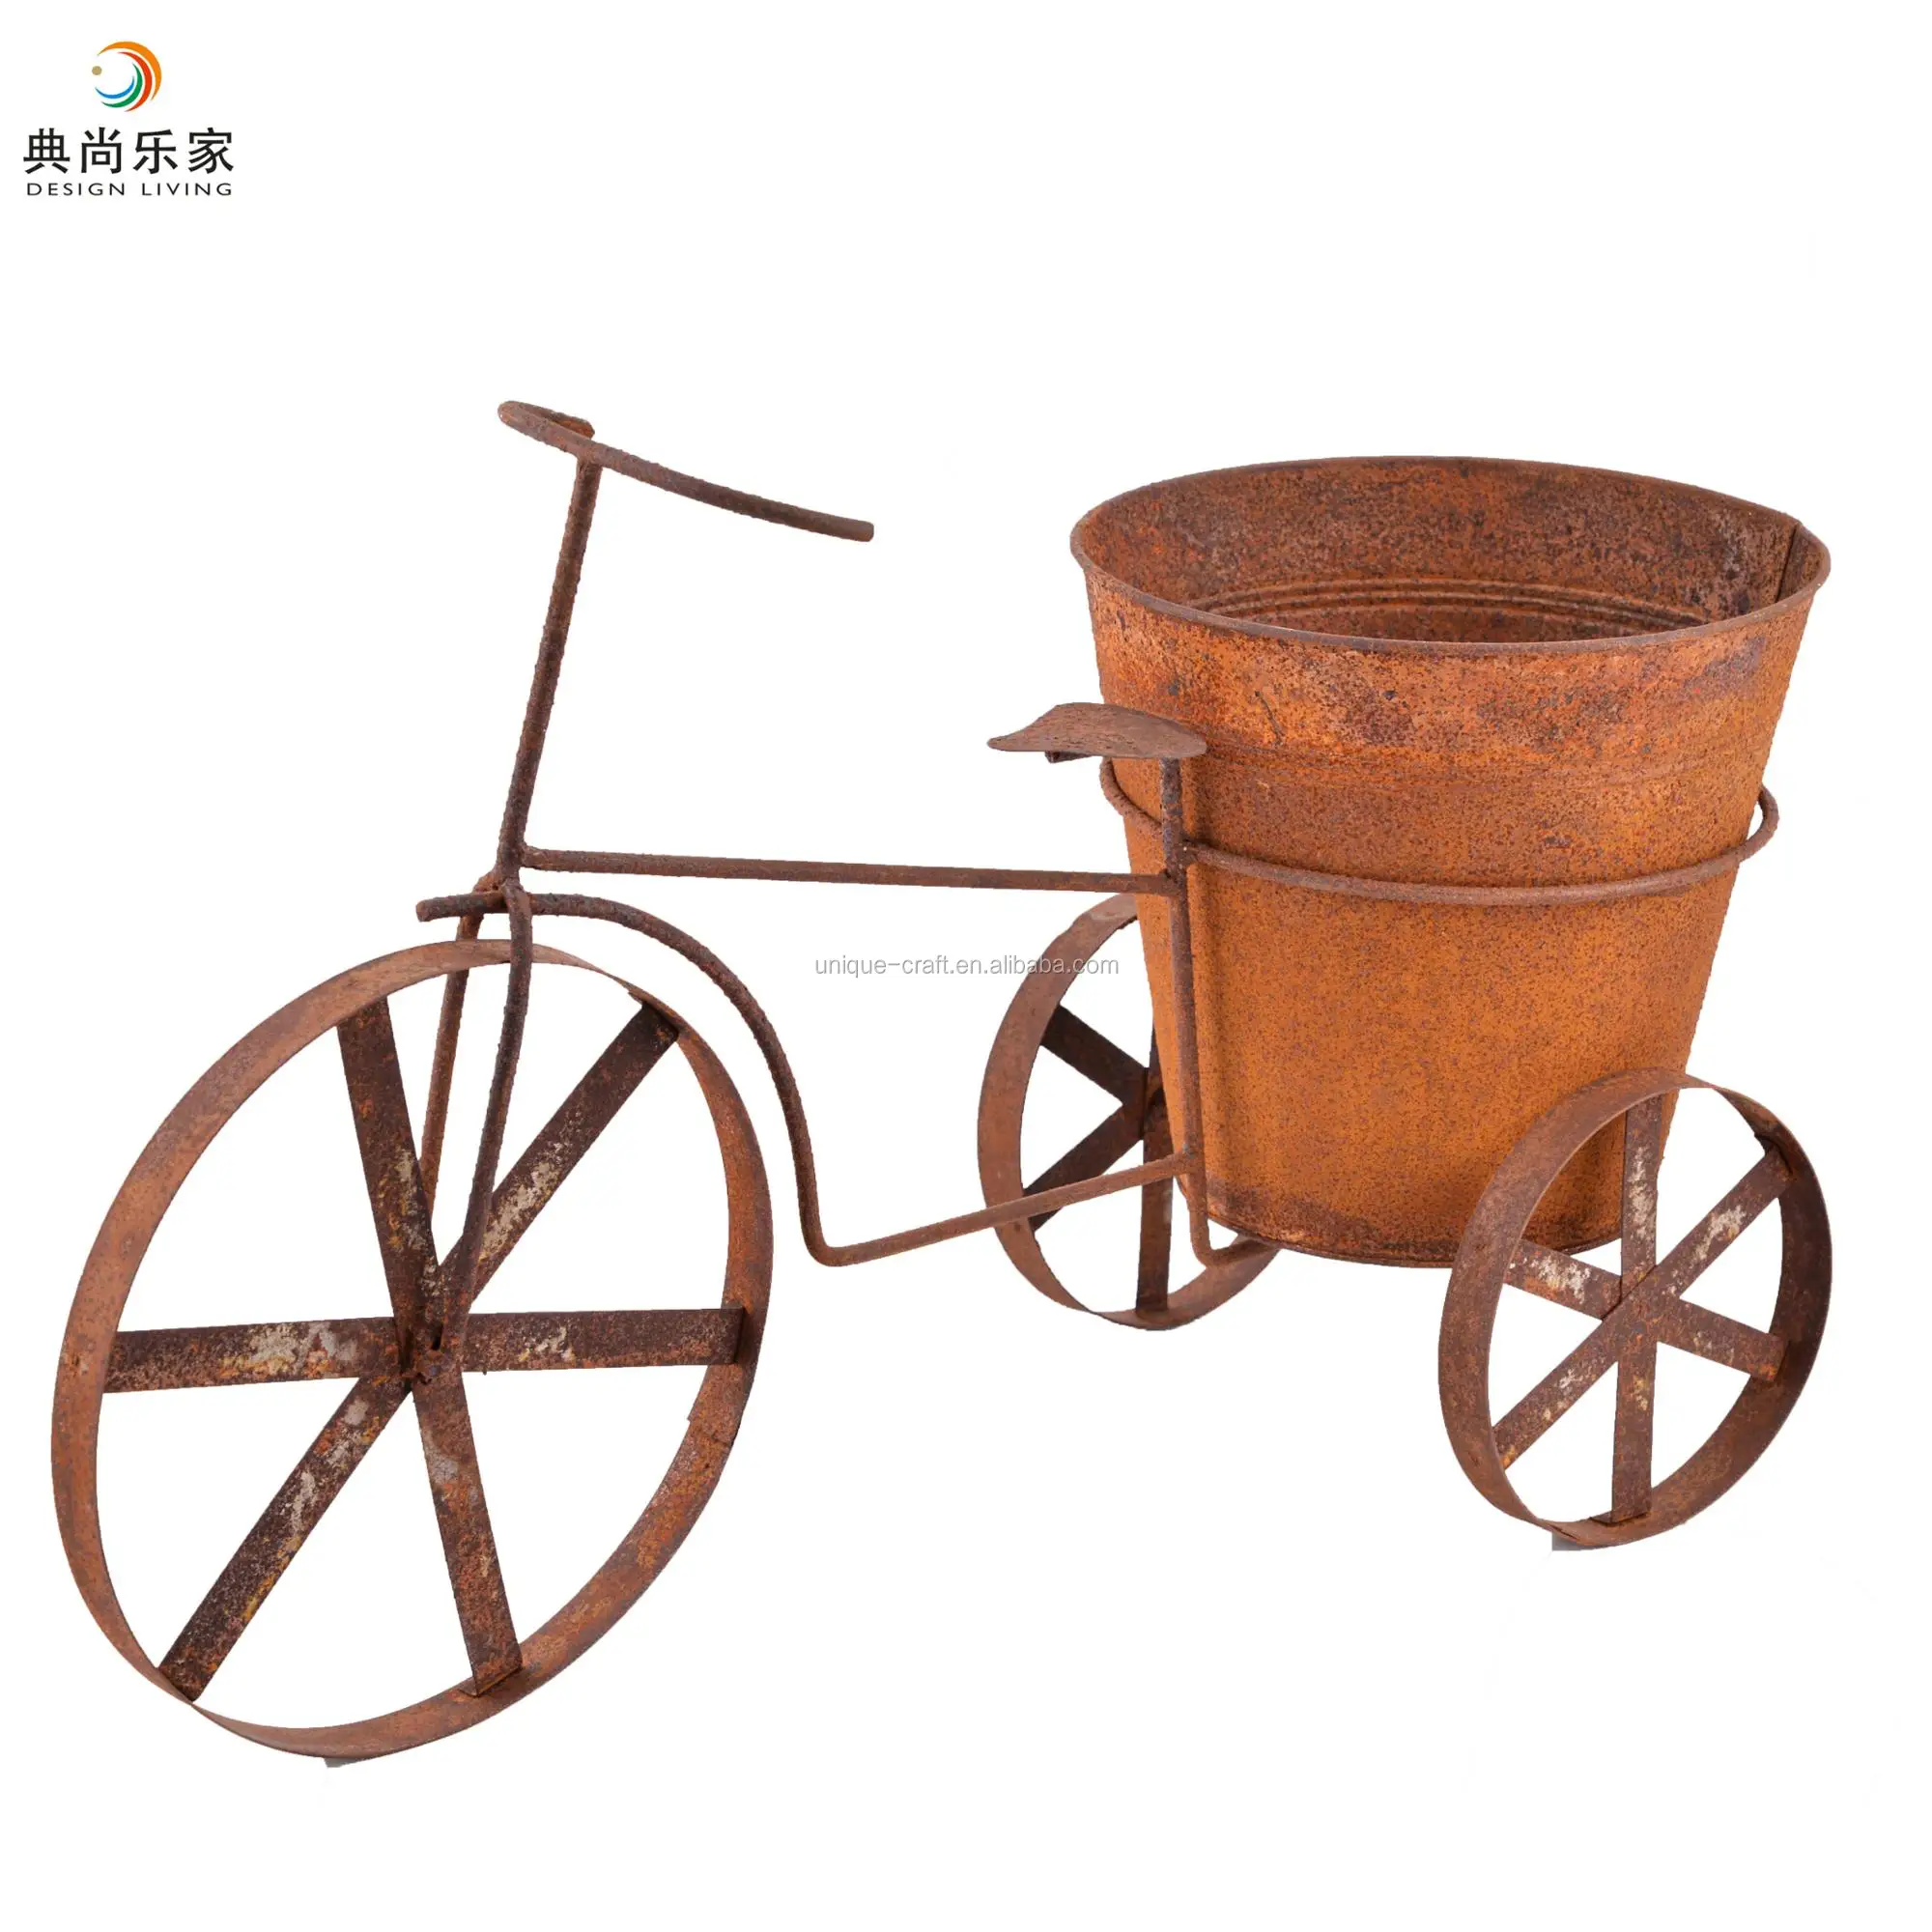 Antique Decorative Metal Bicycle Flower Pots Wholesale Perfect for Wedding Table Centerpiece